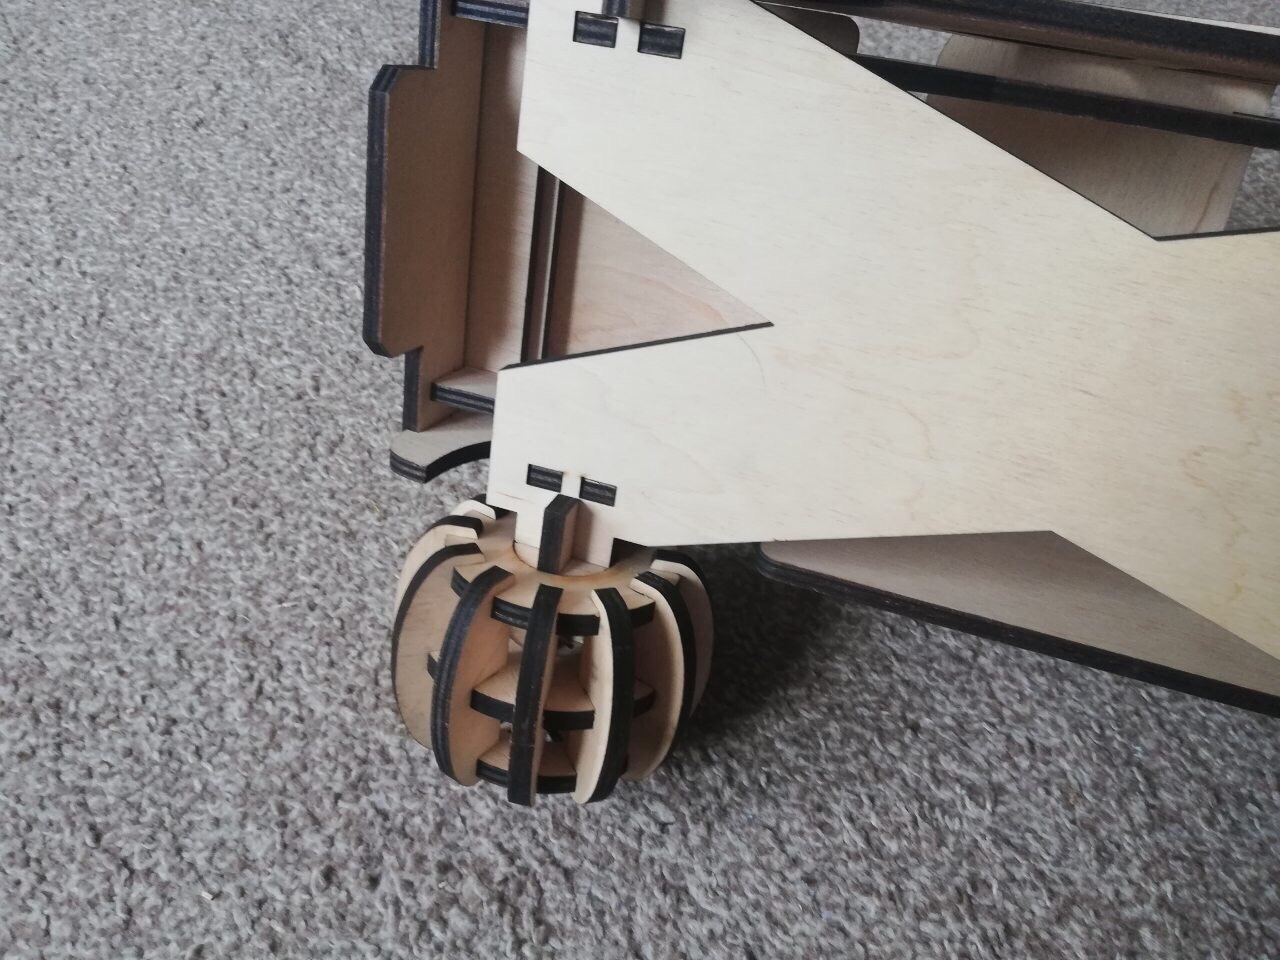 Laser Cut Wooden Toy Truck 3D Model Free Vector